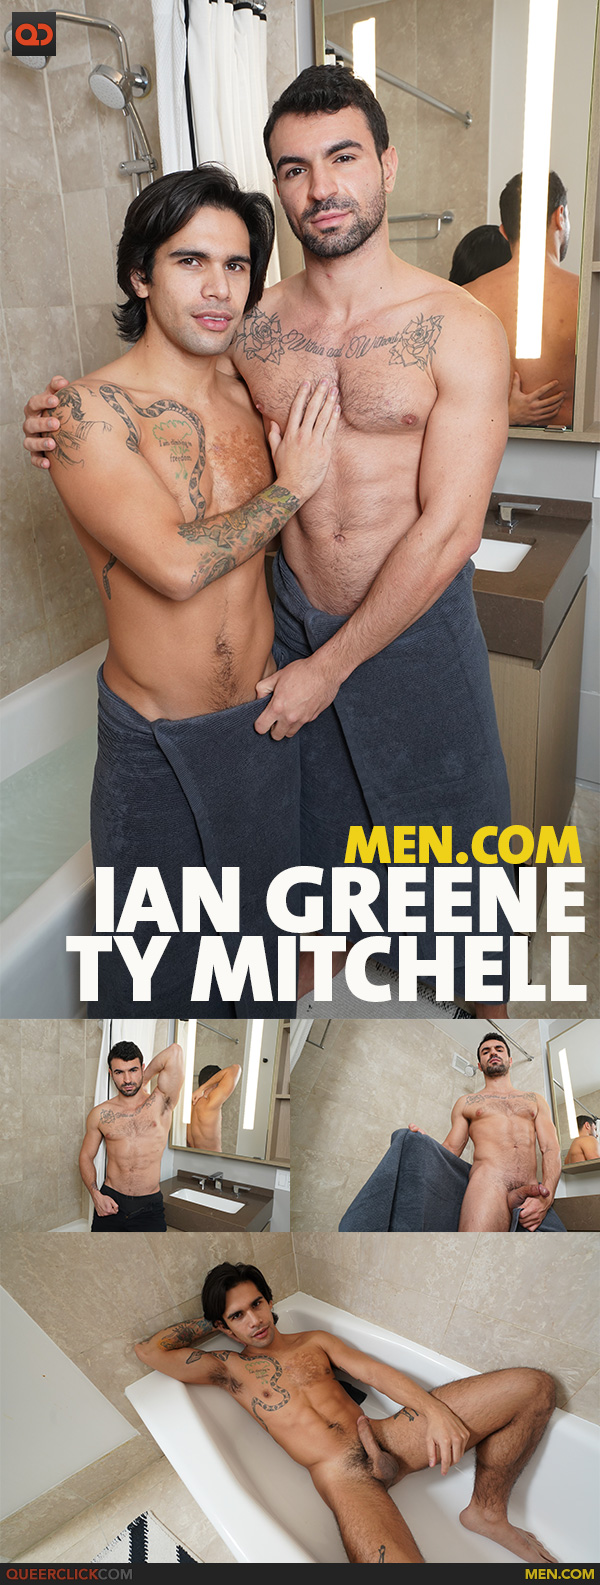 Men.com: Ian Greene and Ty Mitchell